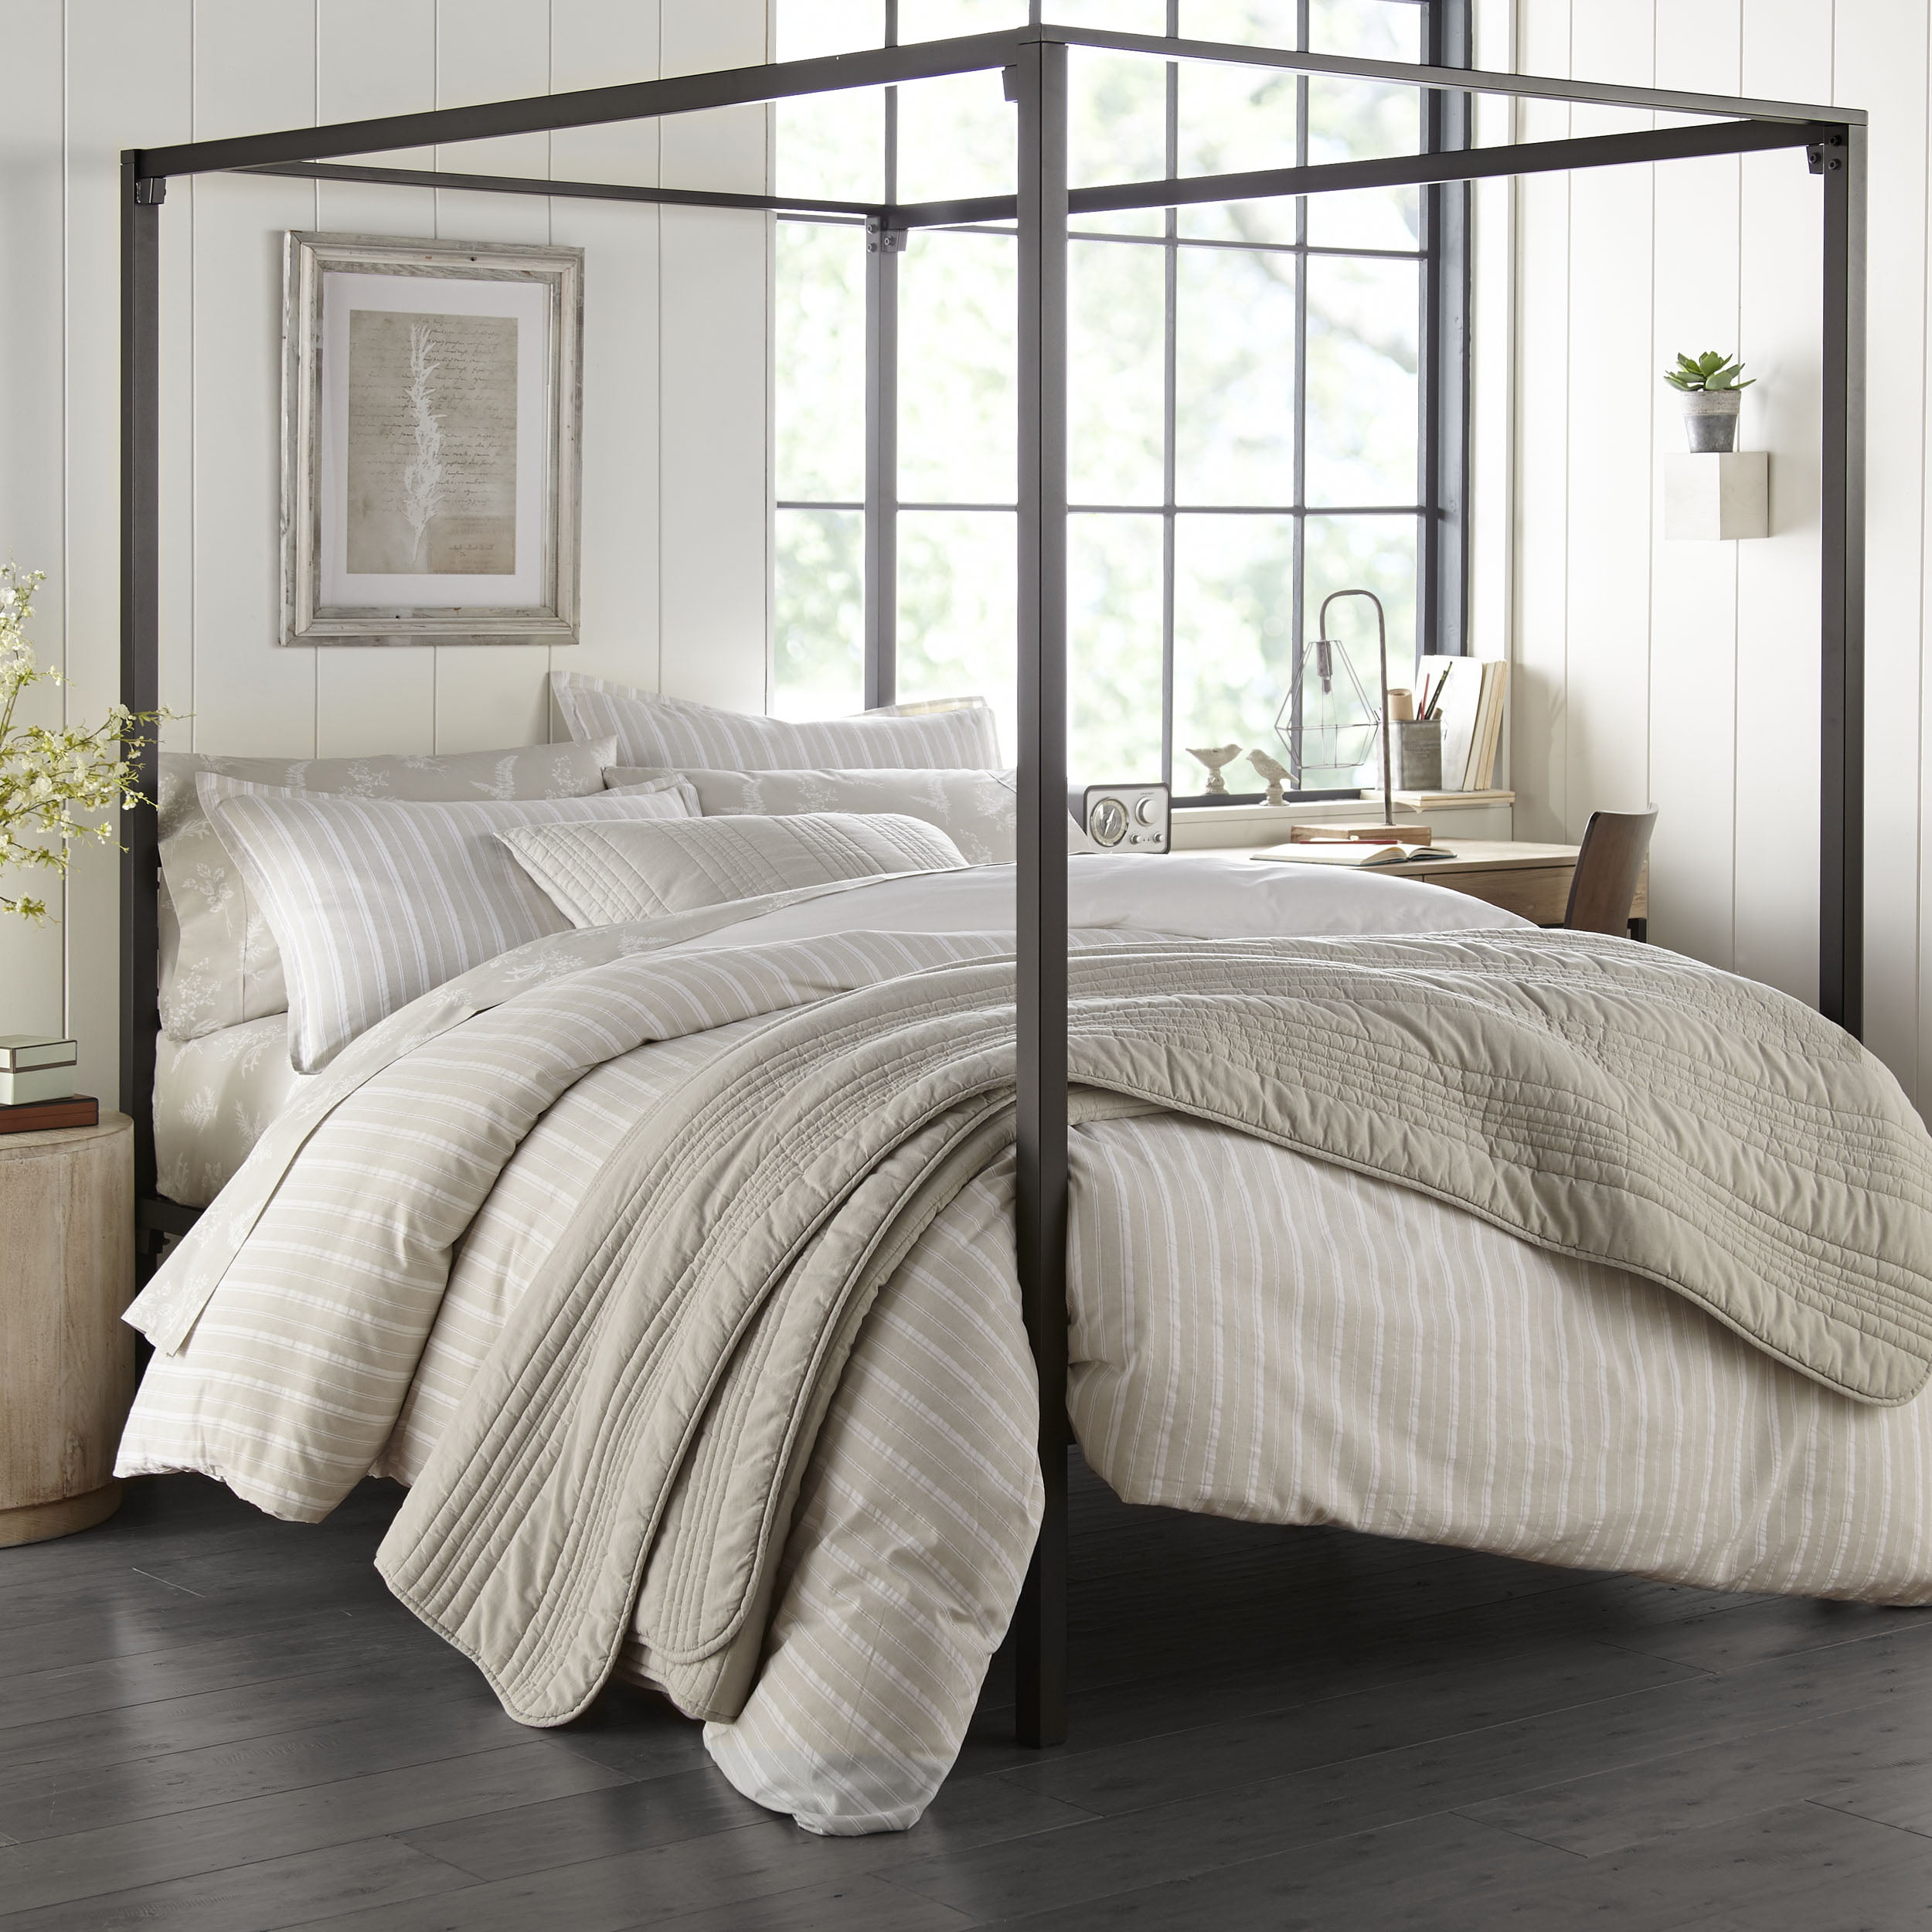 Oakdale Grey Comforter Set, Full/Queen - Walmart.com - Walmart.com